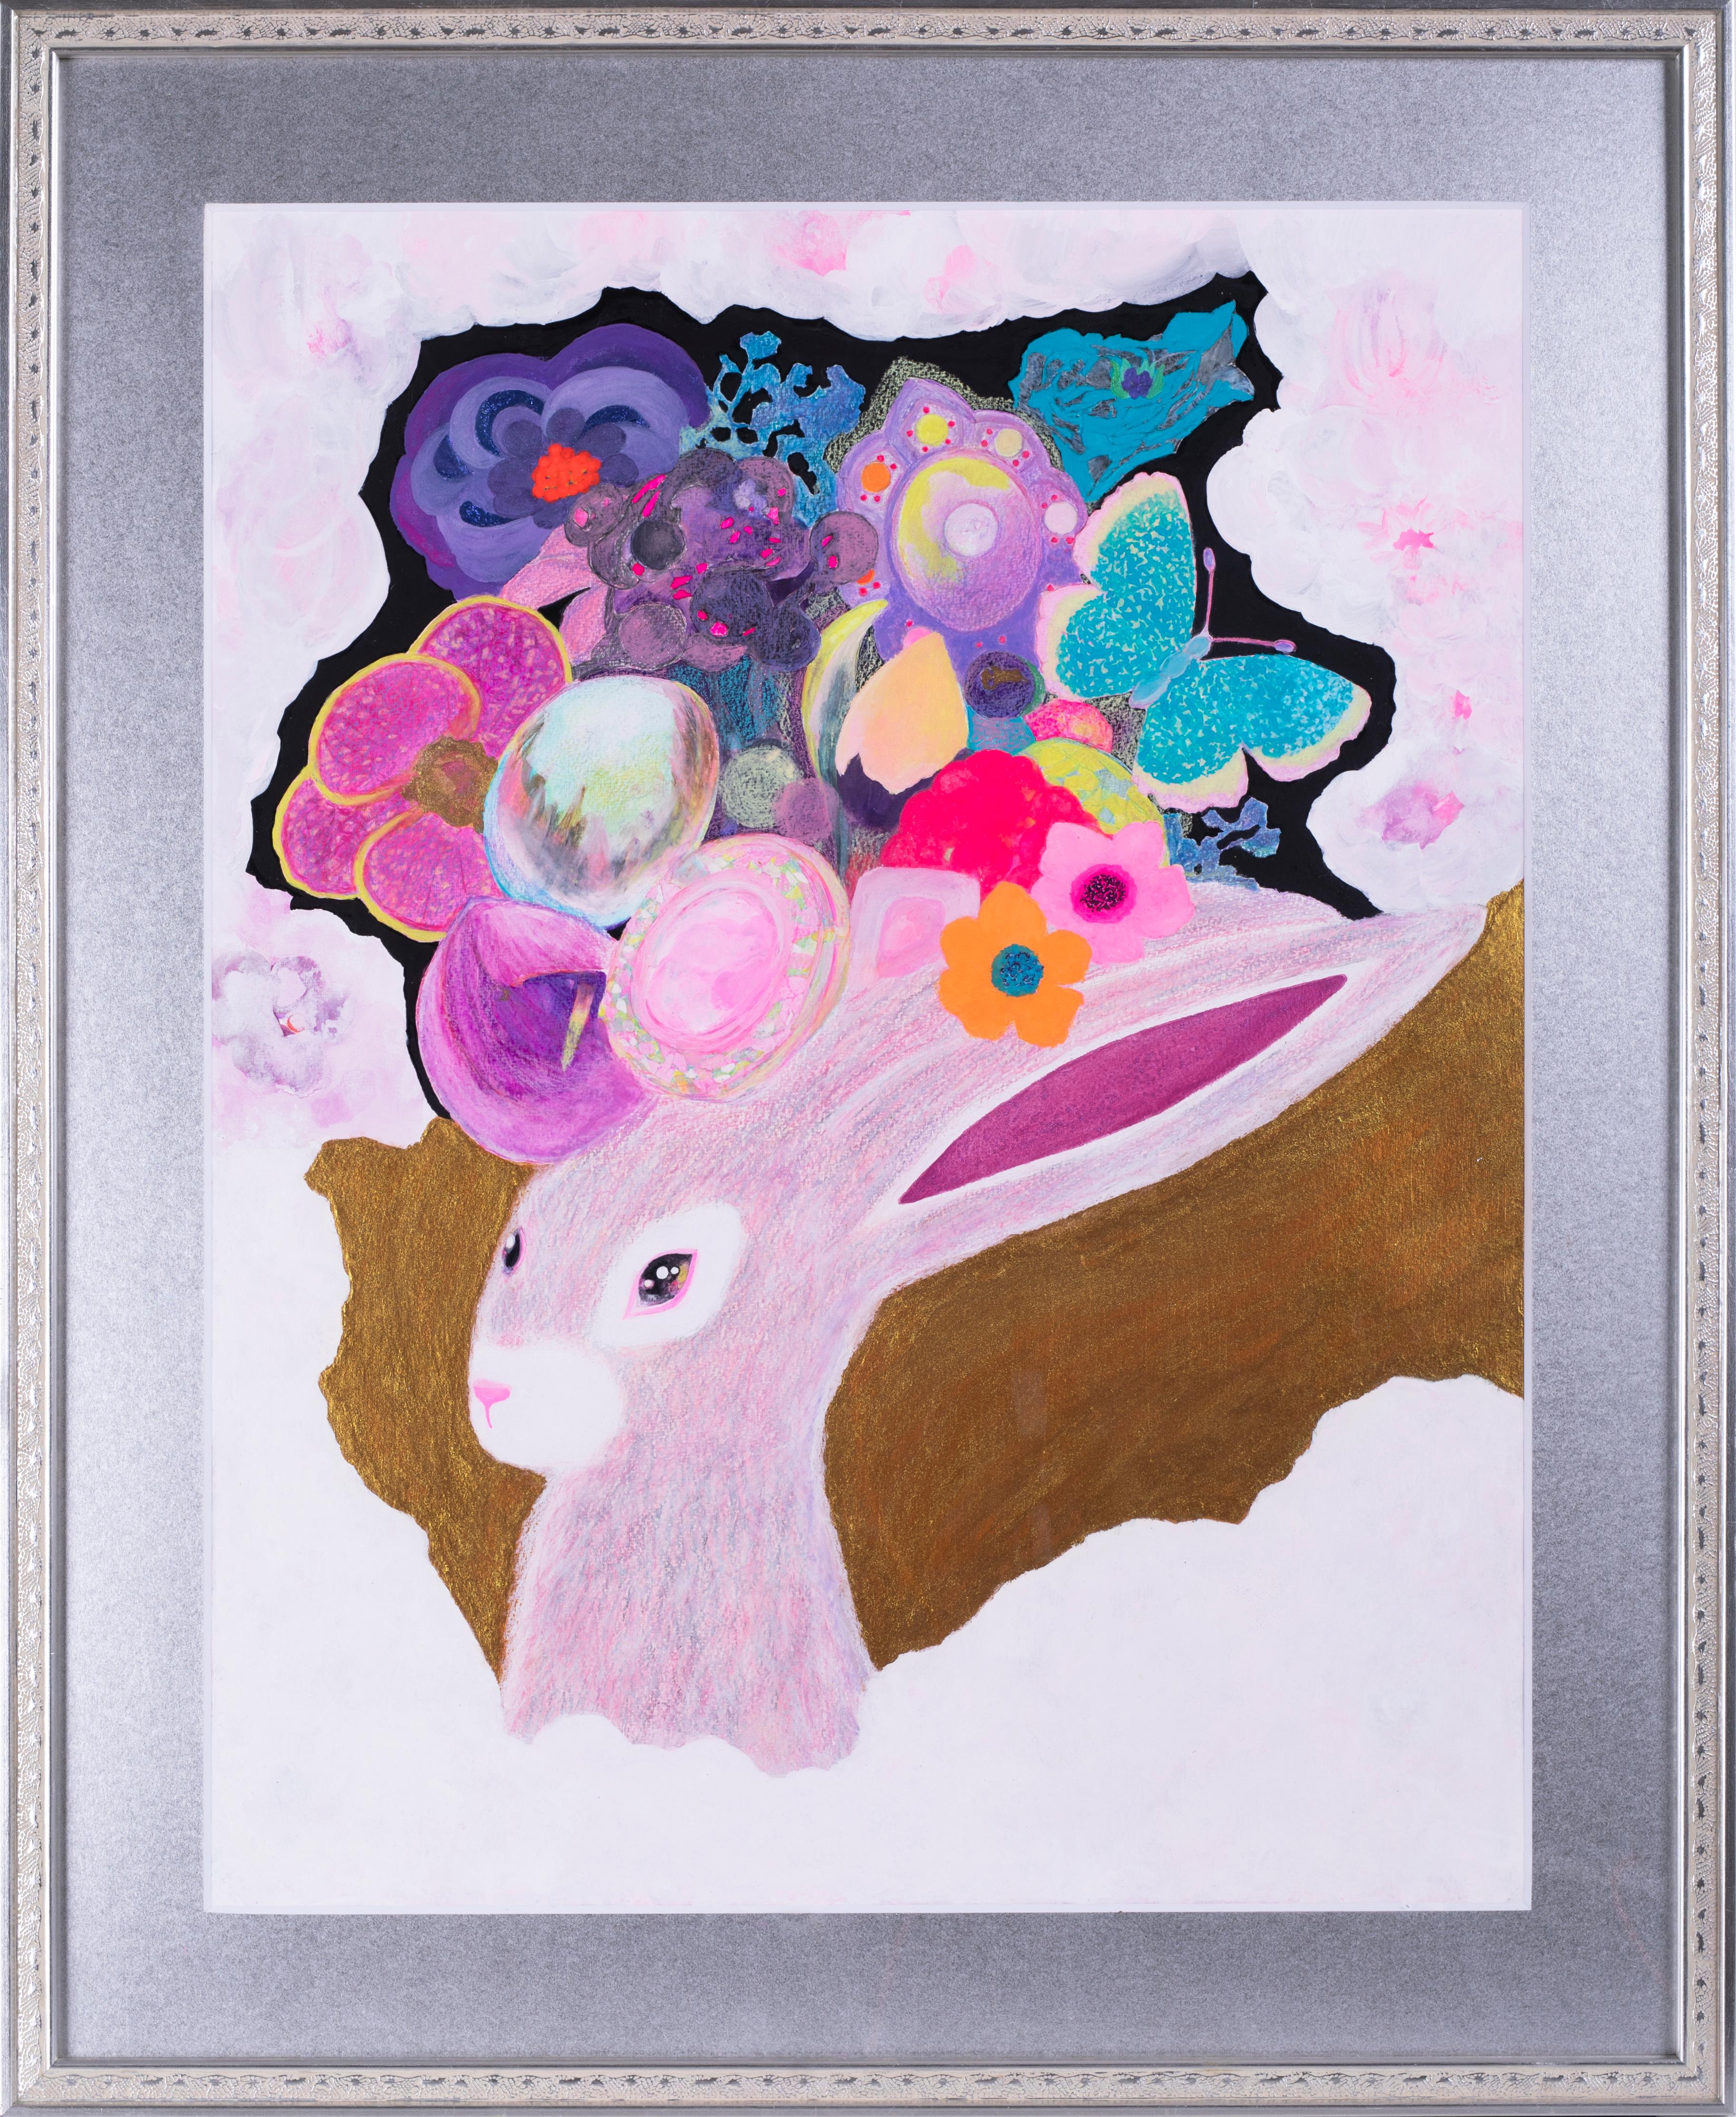 Japanese Contemporary Art by Minako Asakura - Pink Crazy Rabbit  